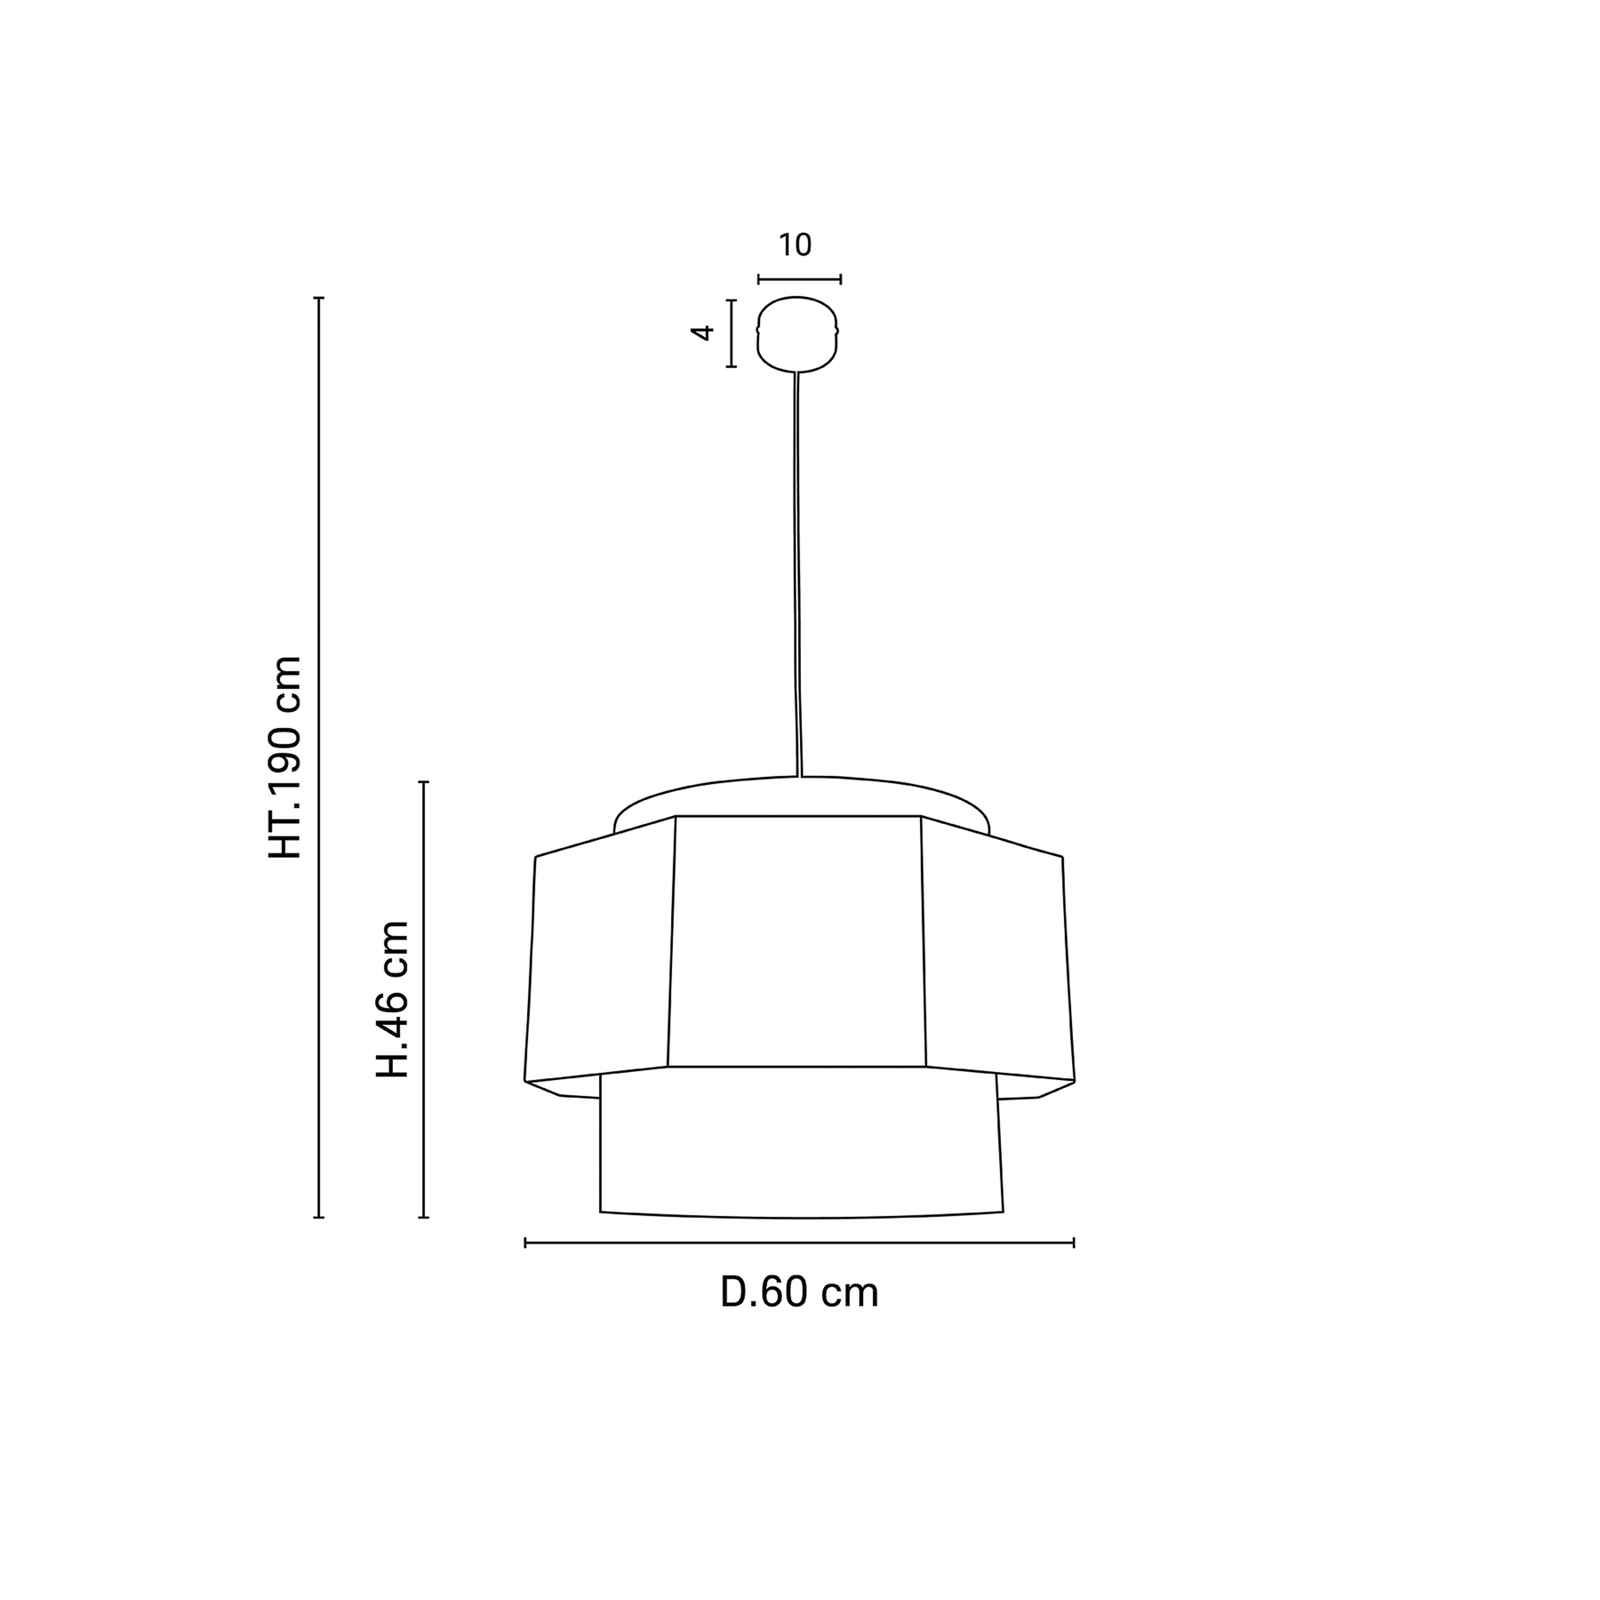 MARKET SET Marrakech Suspension, 60x46cm, kaki